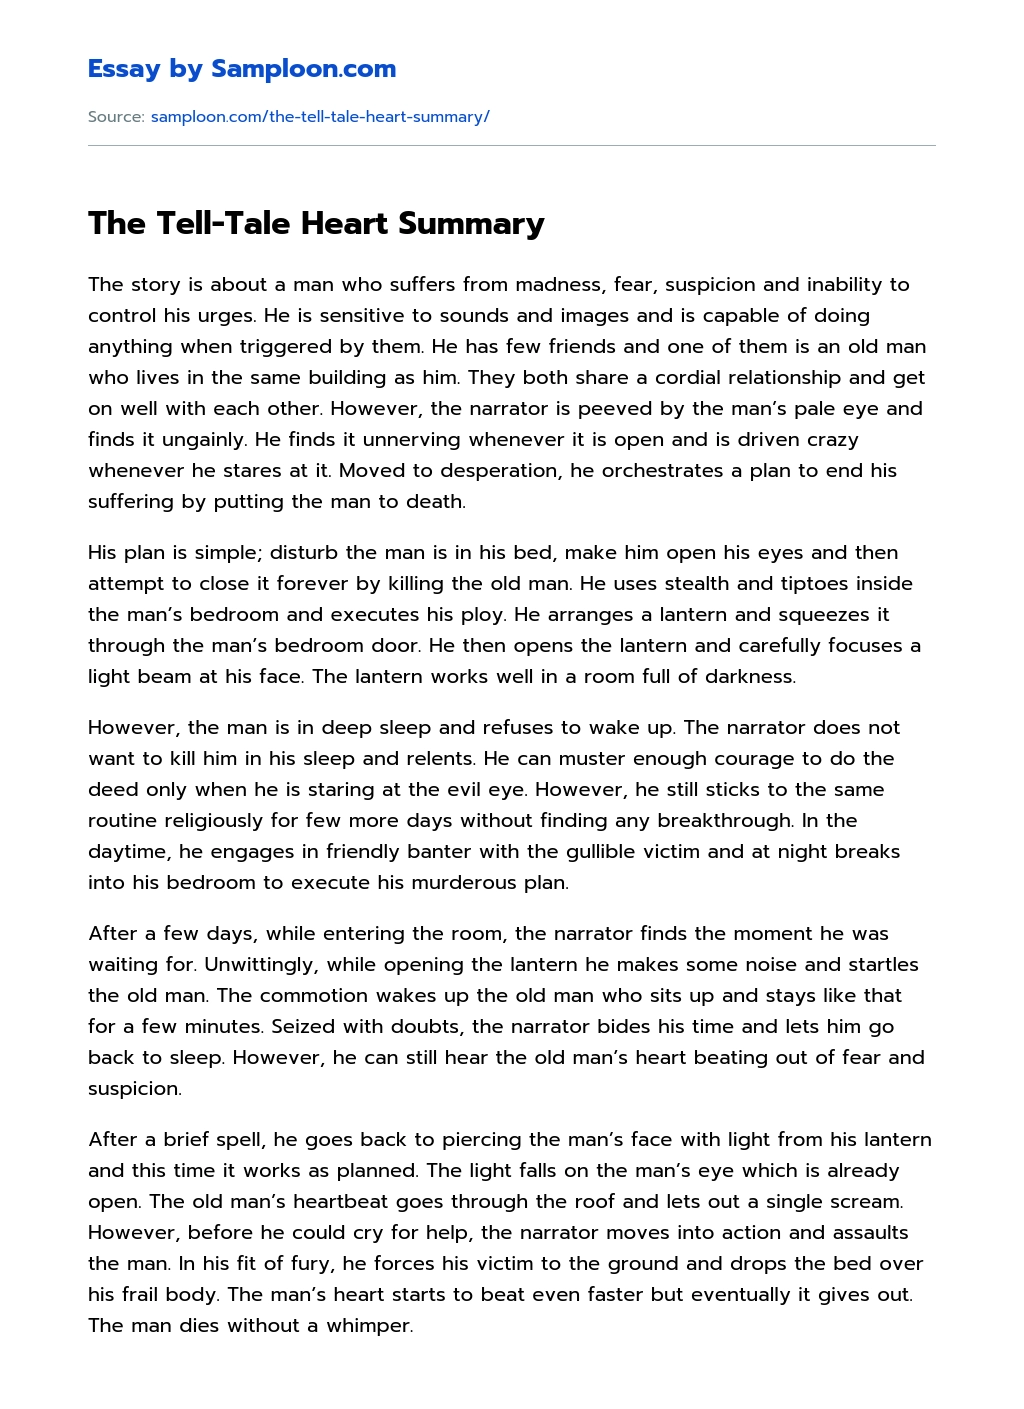 The Tell-Tale Heart Summary essay